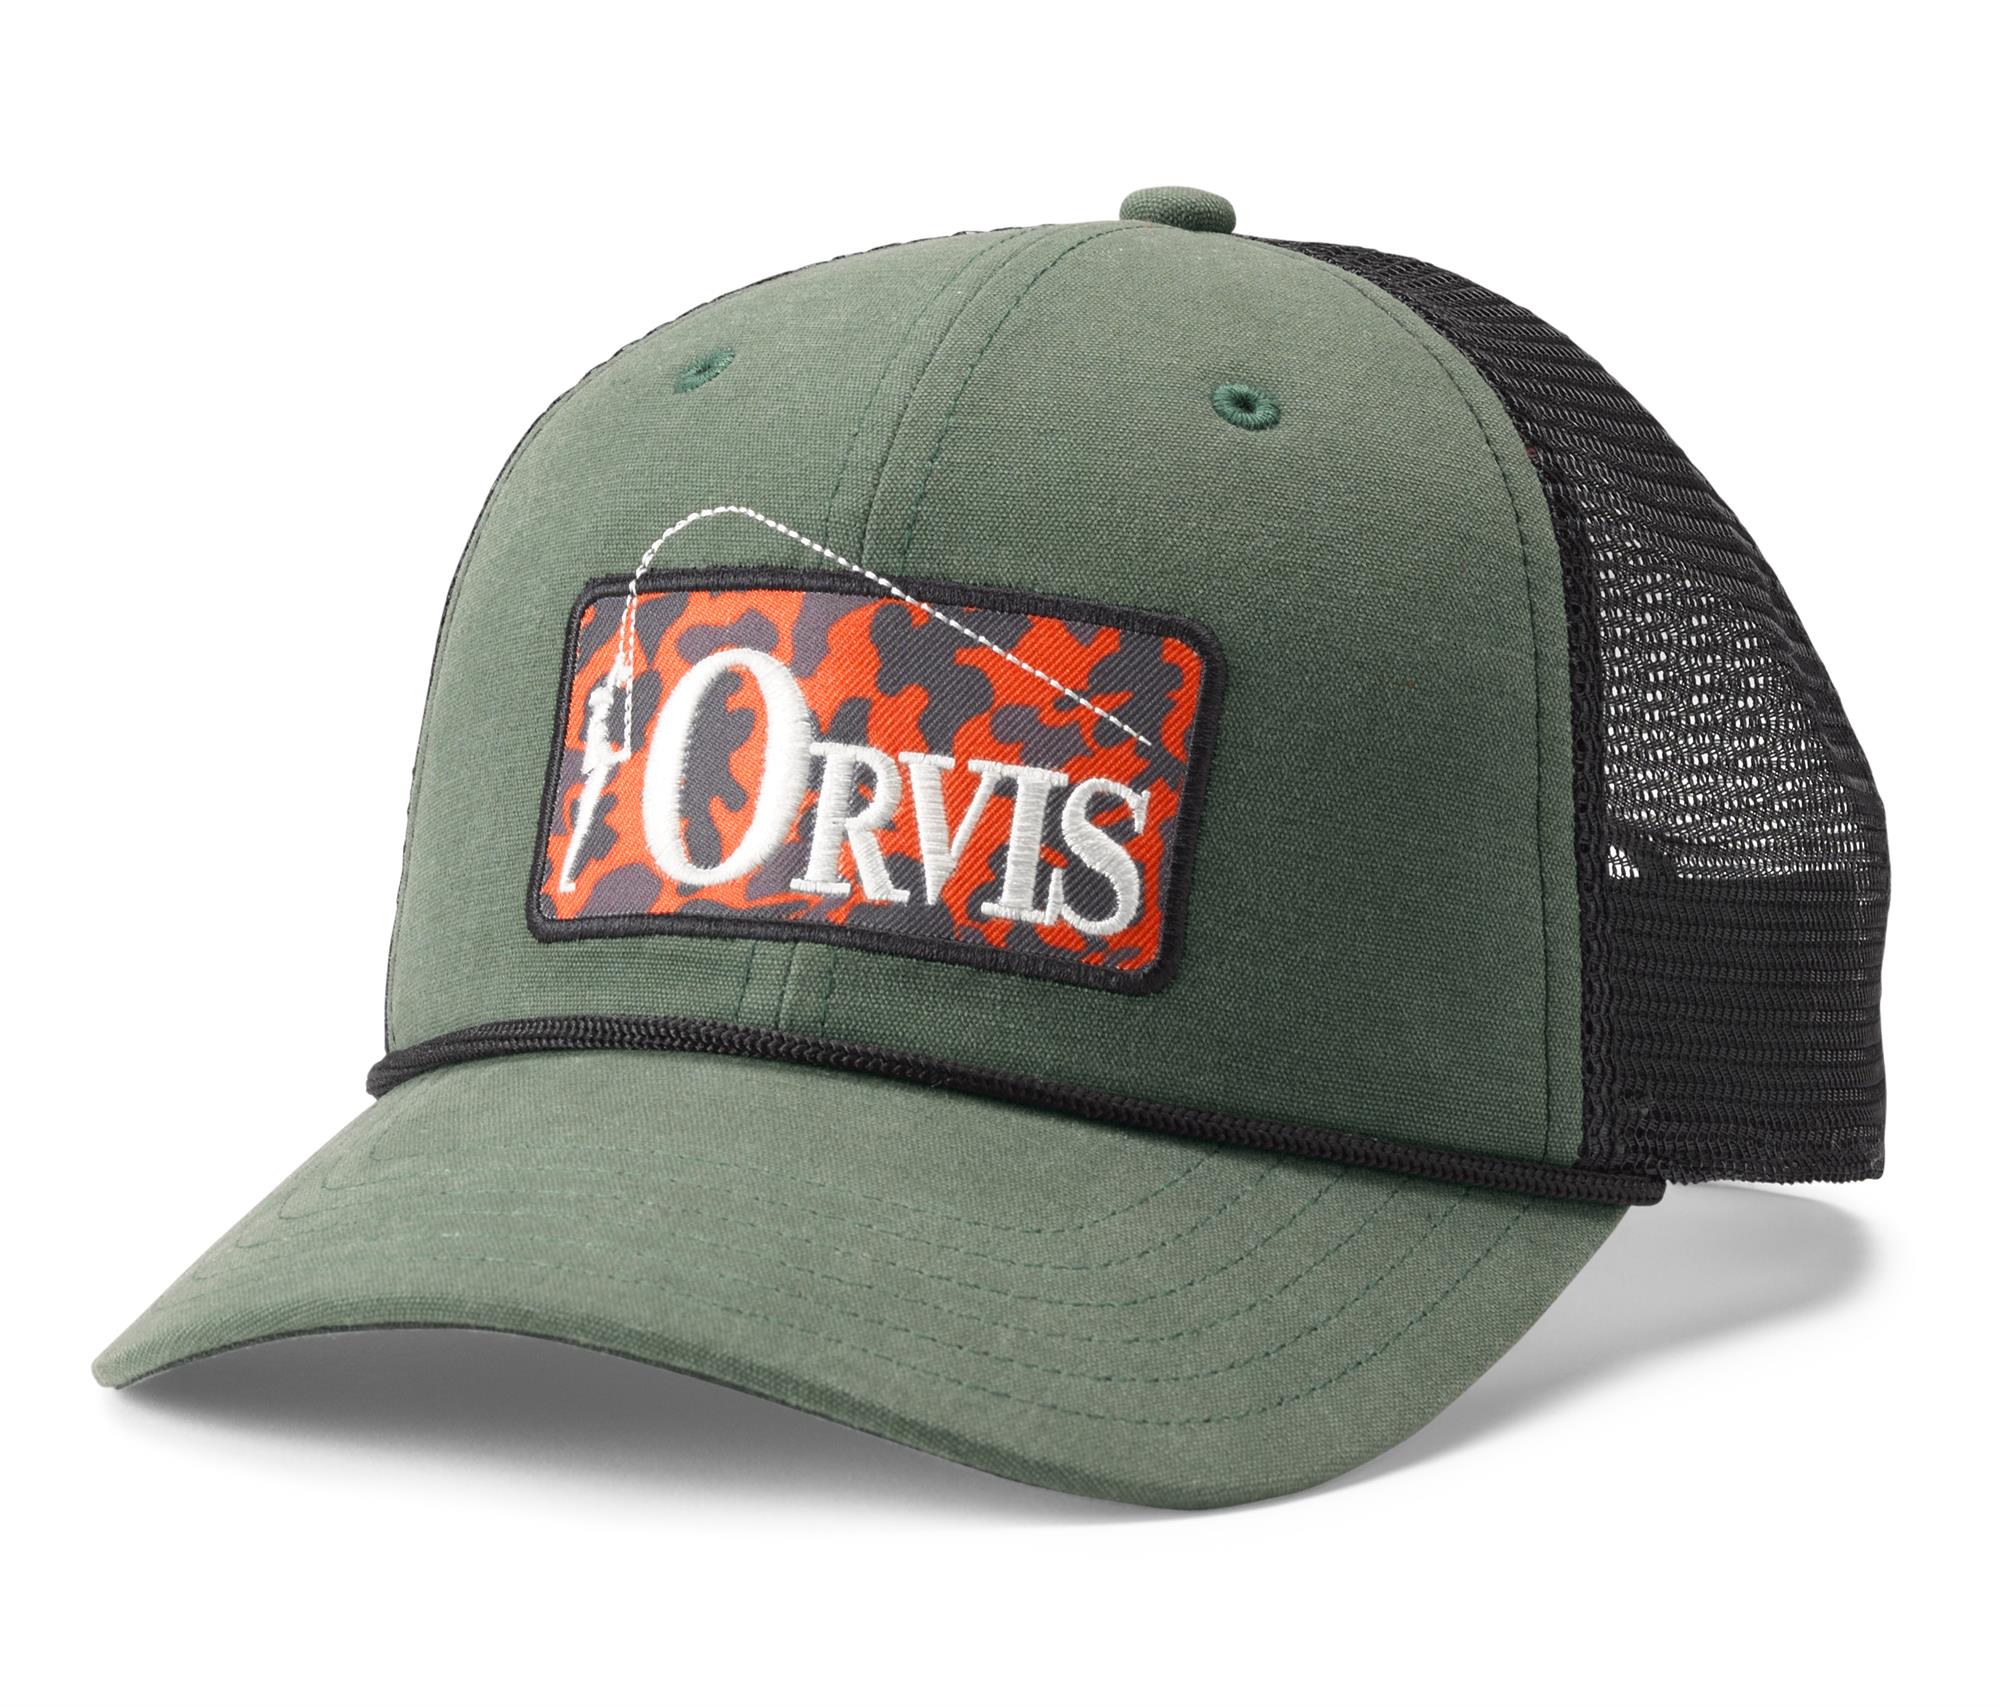 Orvis Camo Bent Rod Trucker Hat is a classic fly fishing trucker hat for sale online.